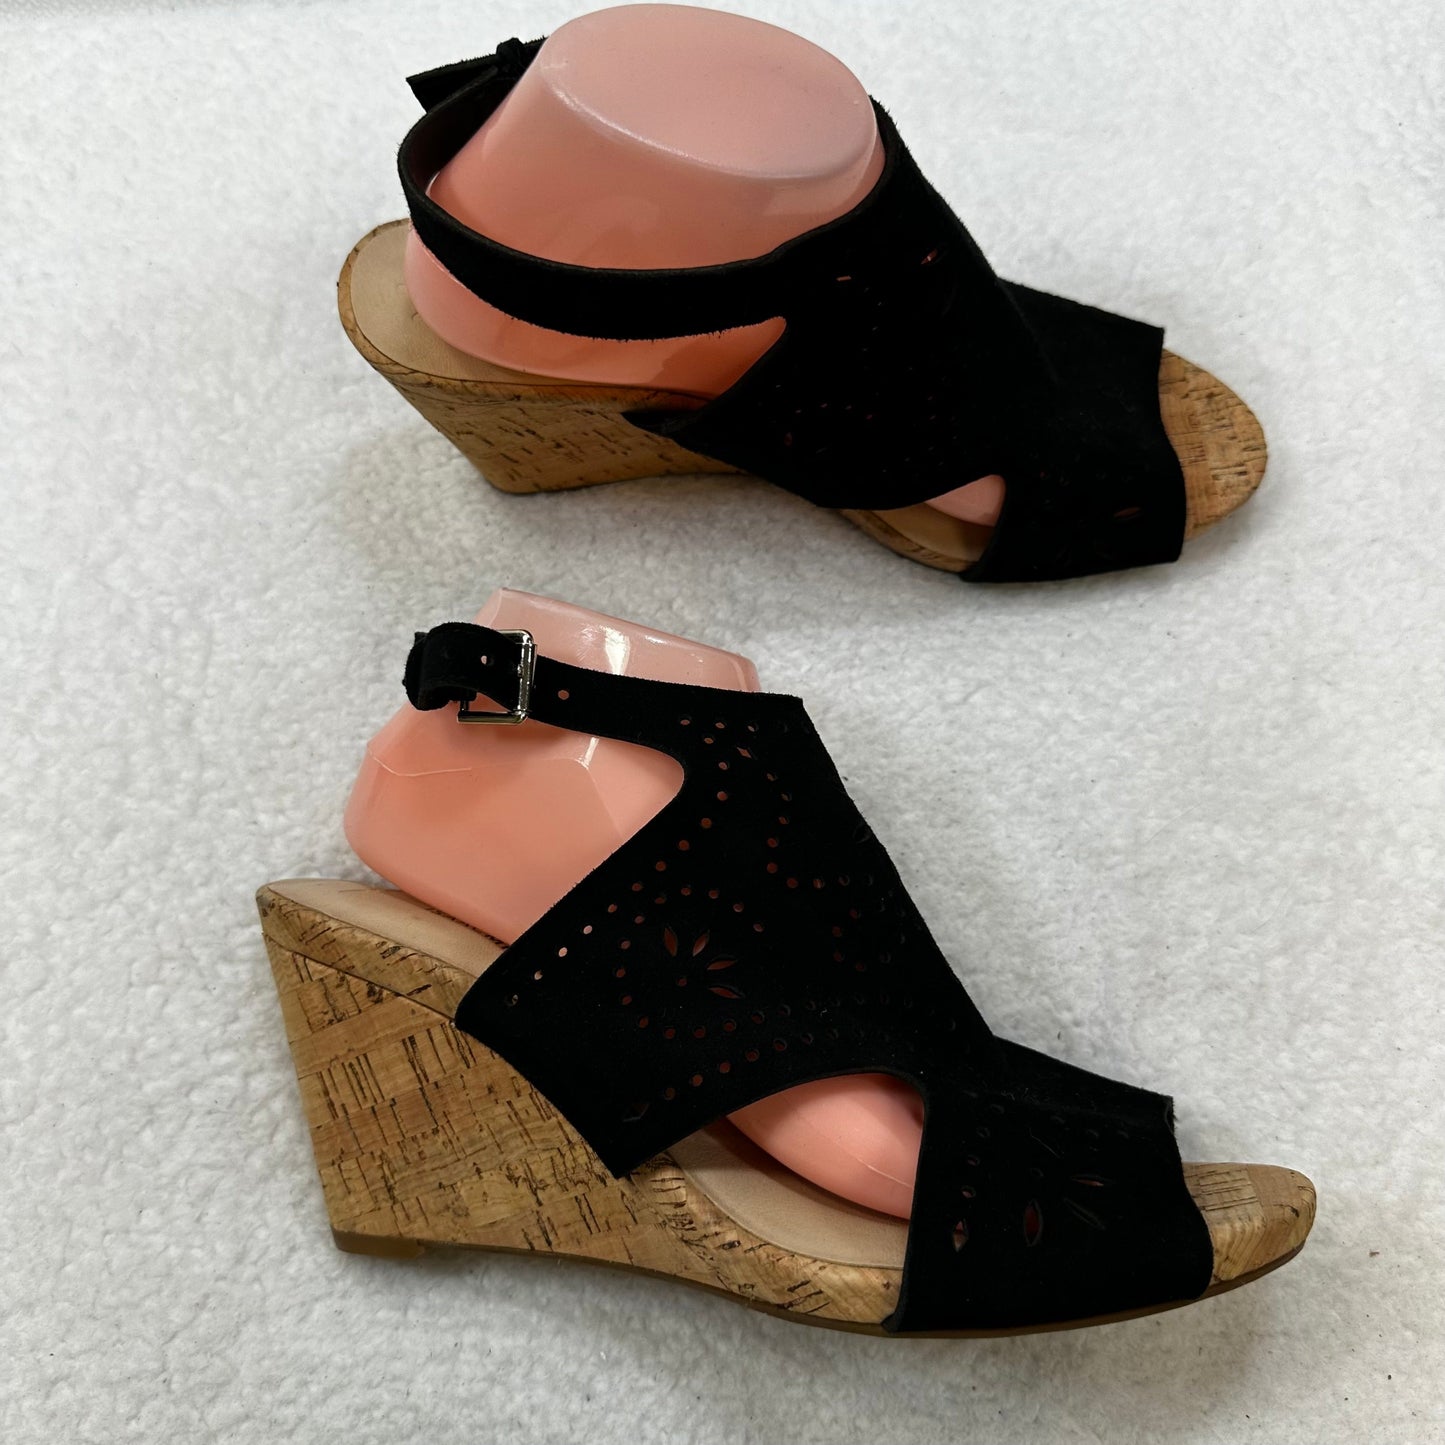 Black Shoes Heels Block Isaac Mizrahi Target, Size 10